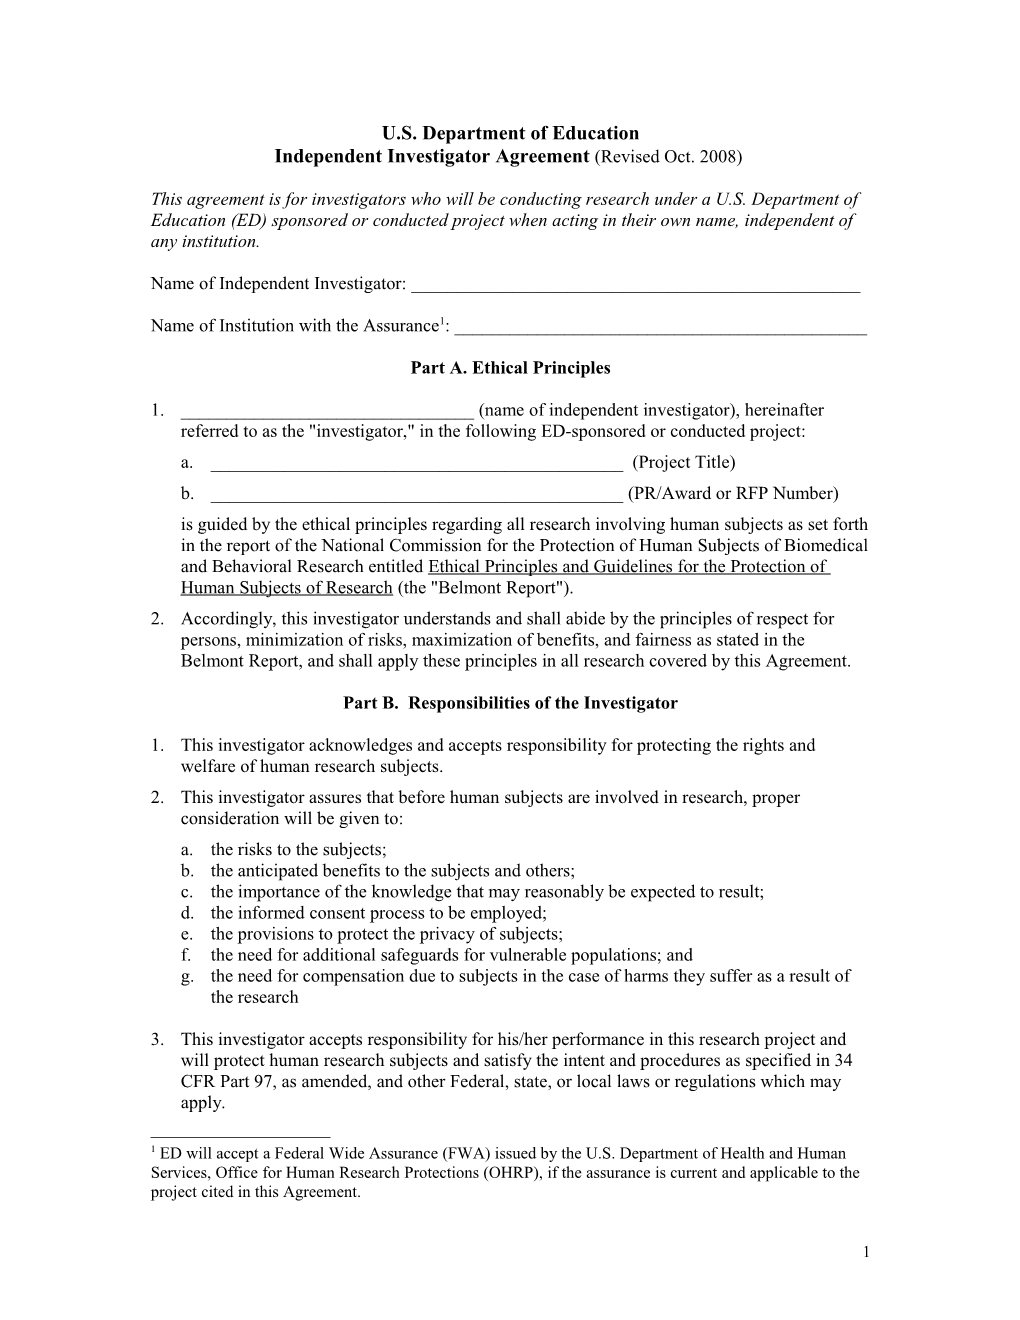 Independent Investigator Agreement October 2008 (Msword)